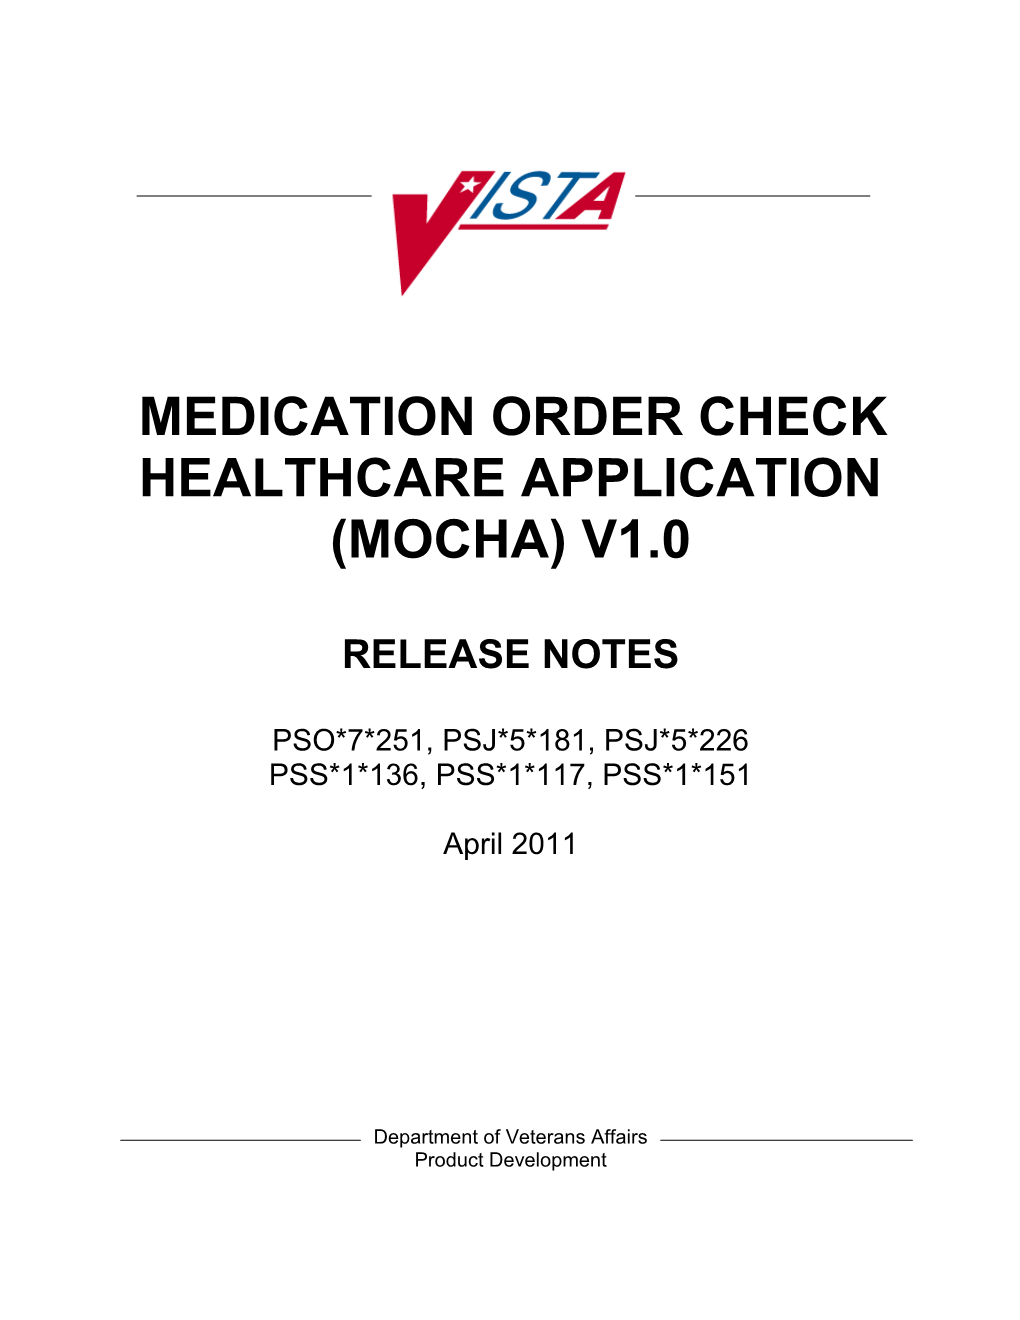 Medication Order Check Healthcare Application (Mocha) V1.0